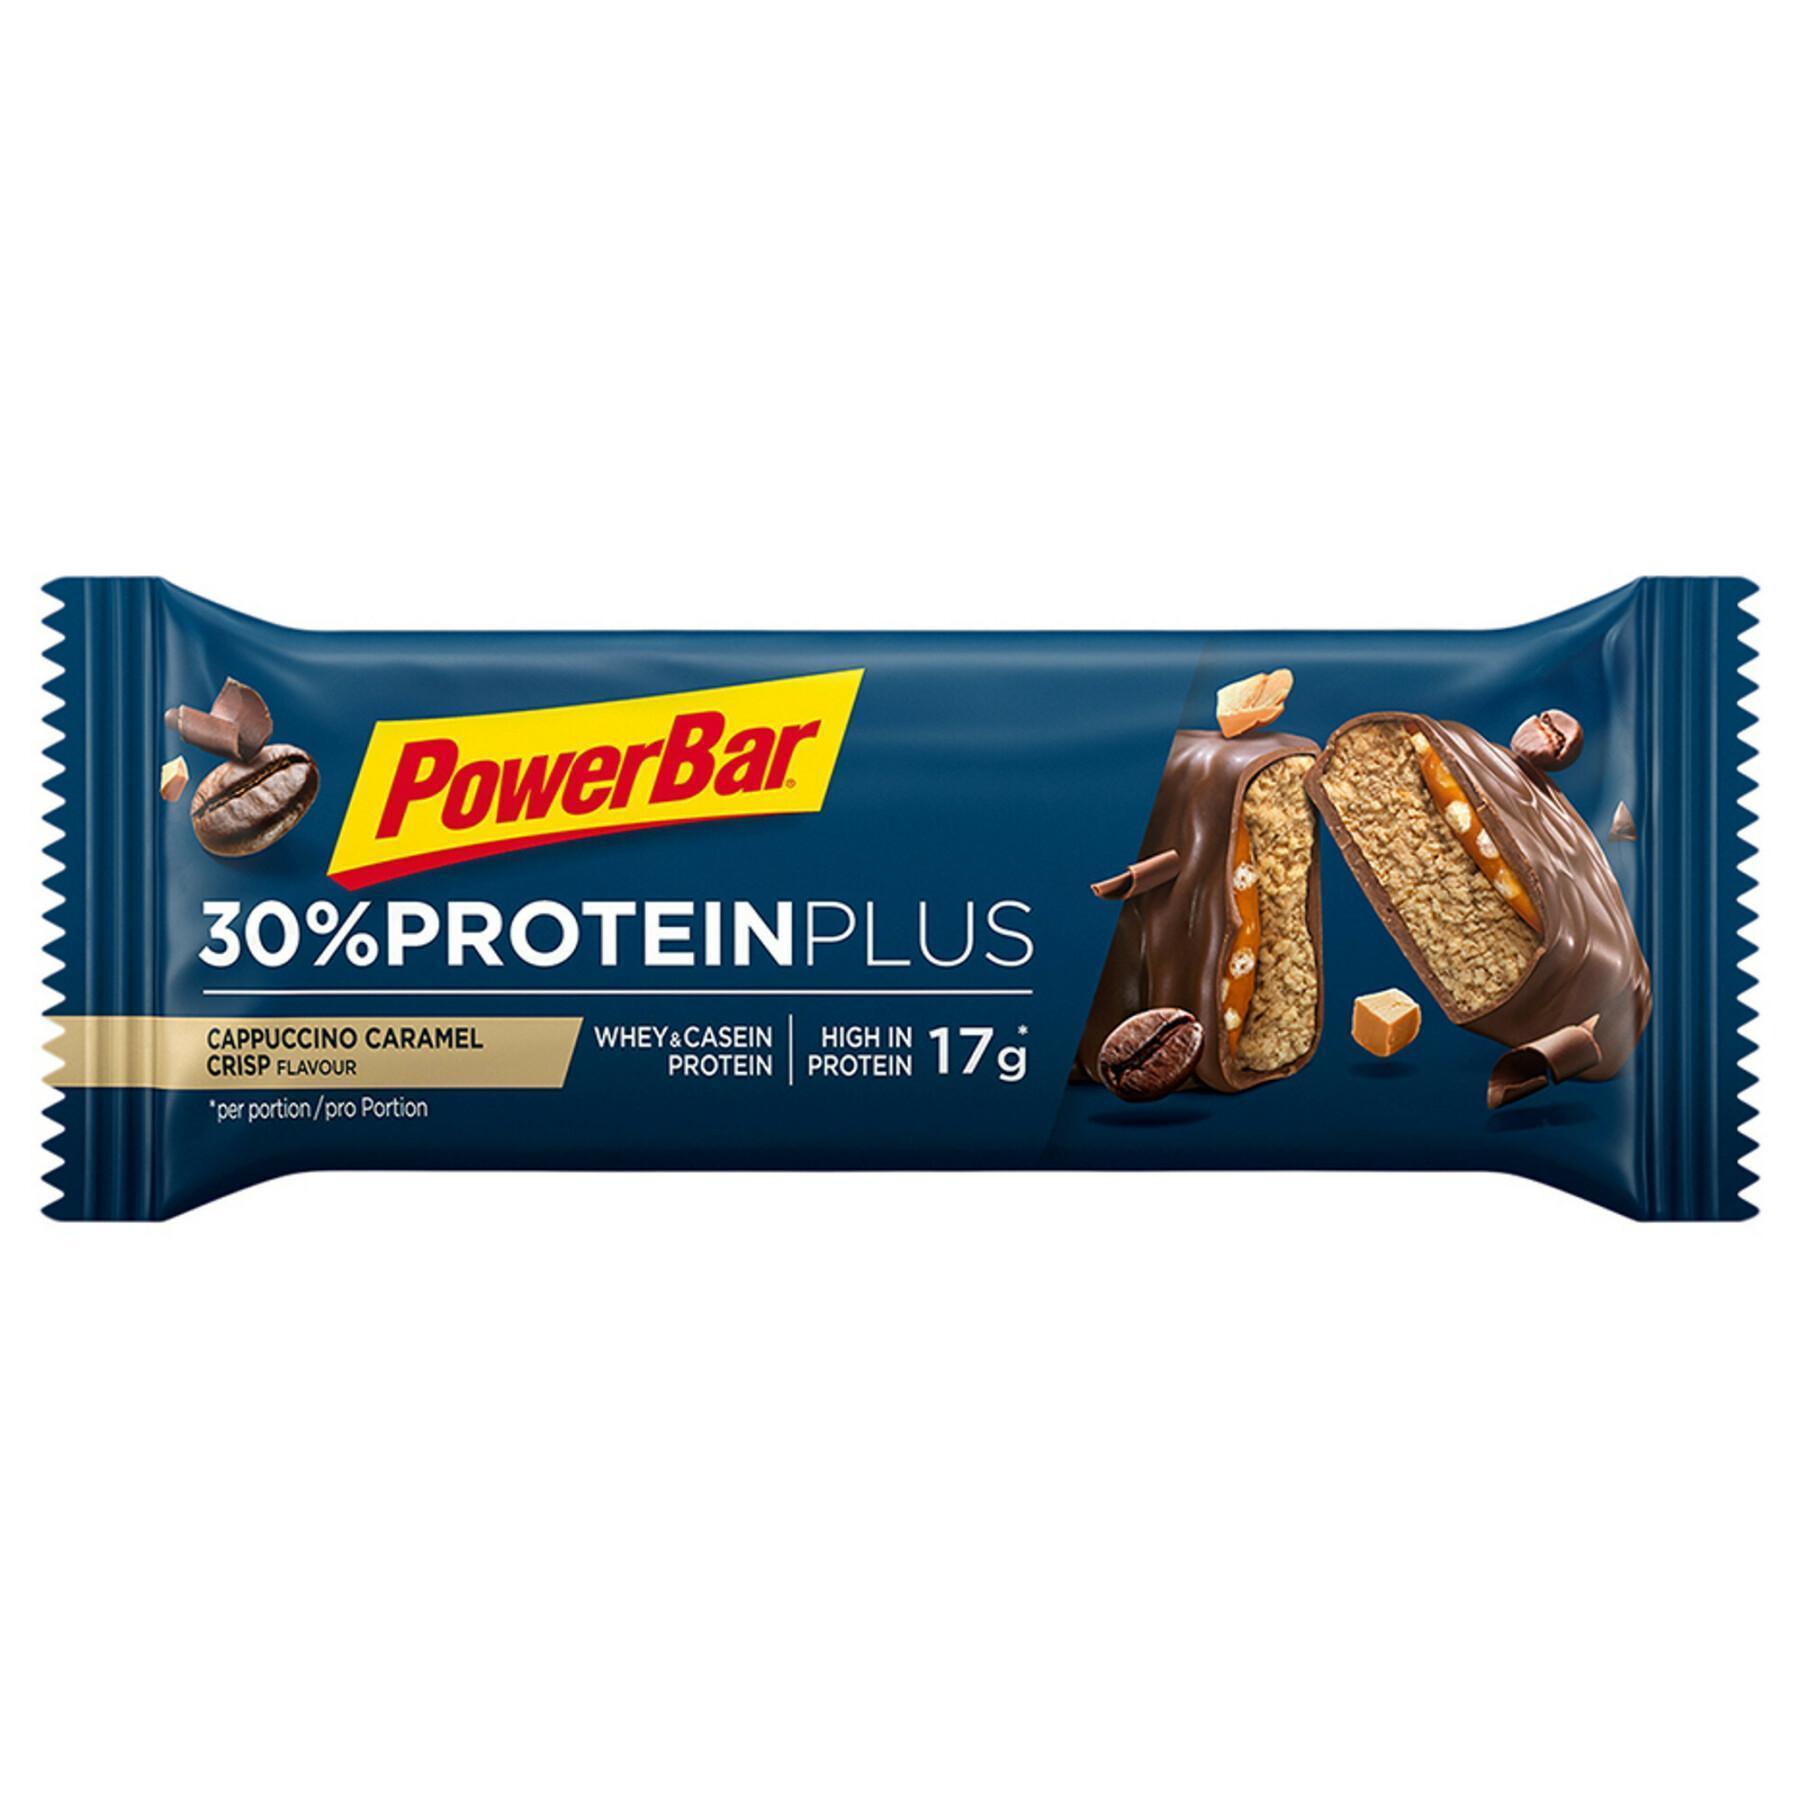 Conjunto de 15 barras PowerBar ProteinPlus 30 % - Cappuccino-Caramel-Crisp